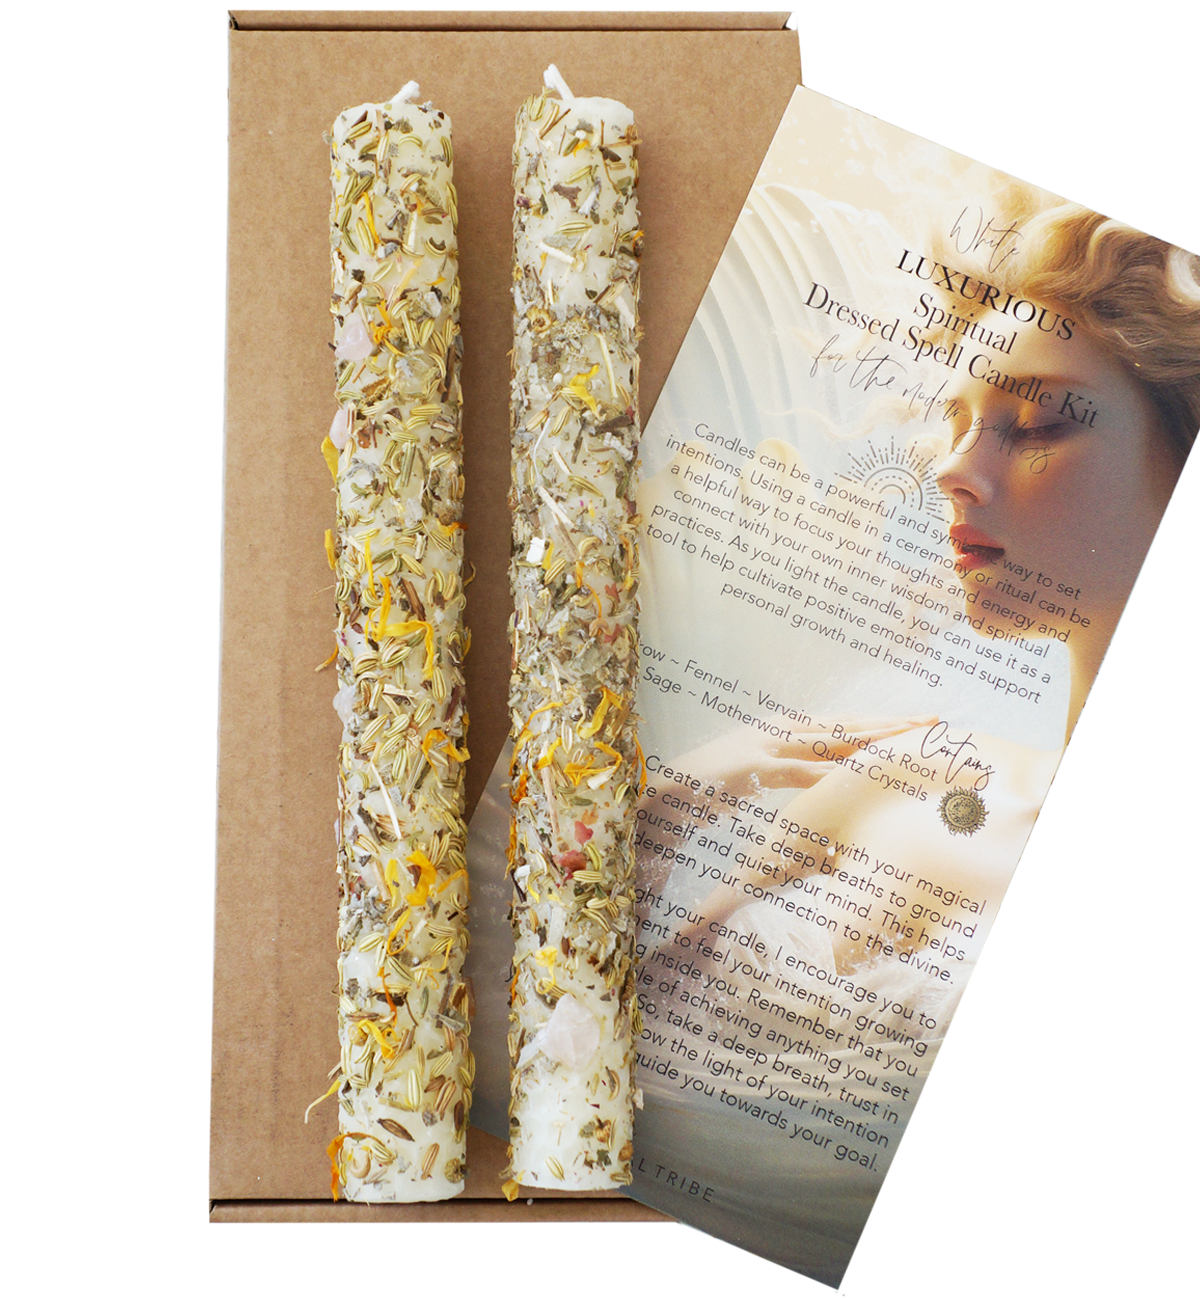 White Luxurious Spiritual Dresses Spell Candle Kit | For the Modern Goddess